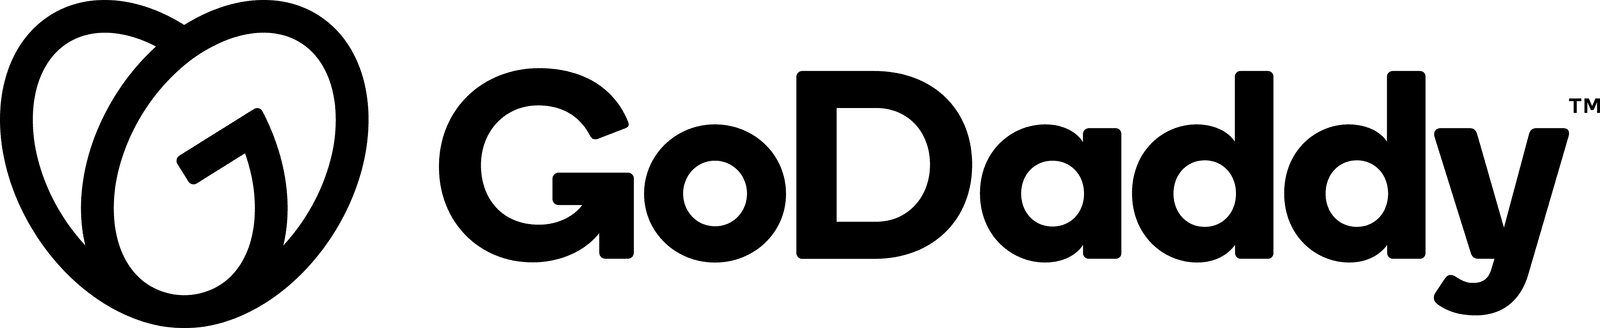 Godaddy_logo